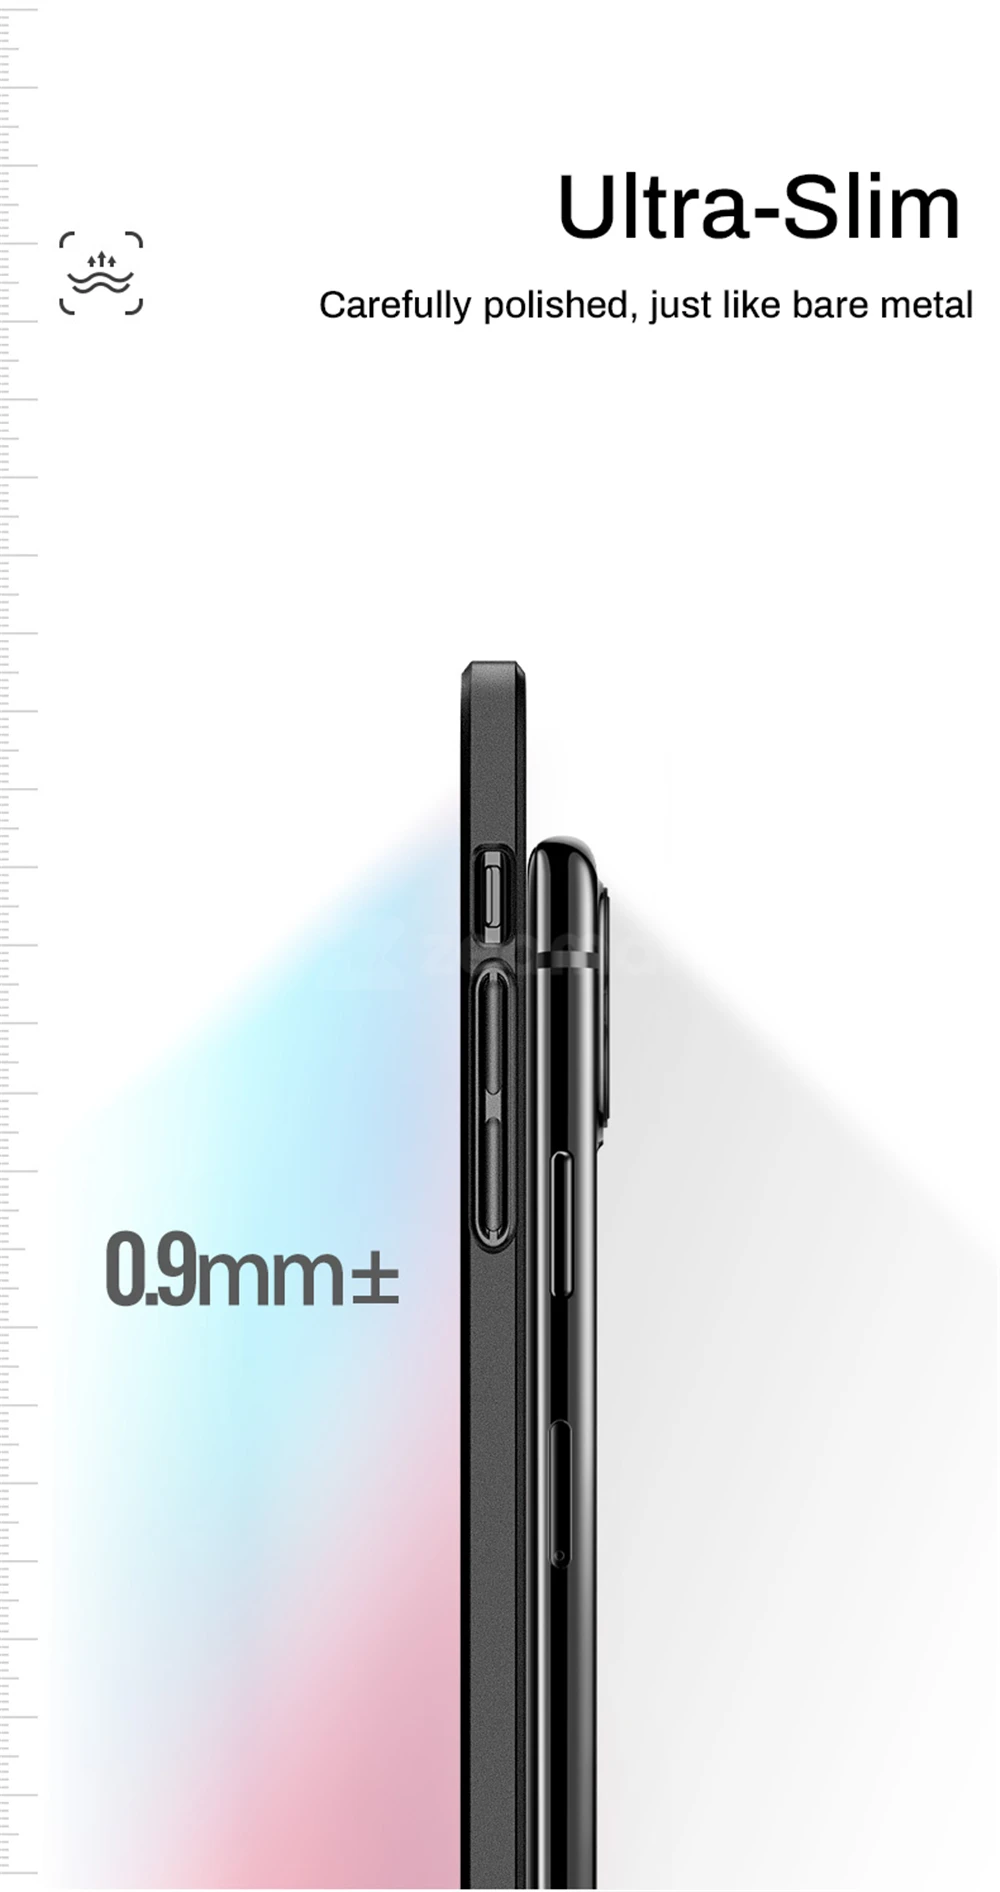 Matte Sandstone Plastic Phone Case For iPhone 13 Pro 11 Pro Max 12 Mini SE 2020 7 8 Plus X XR XS Max Slim Scrub Hard Back Cover